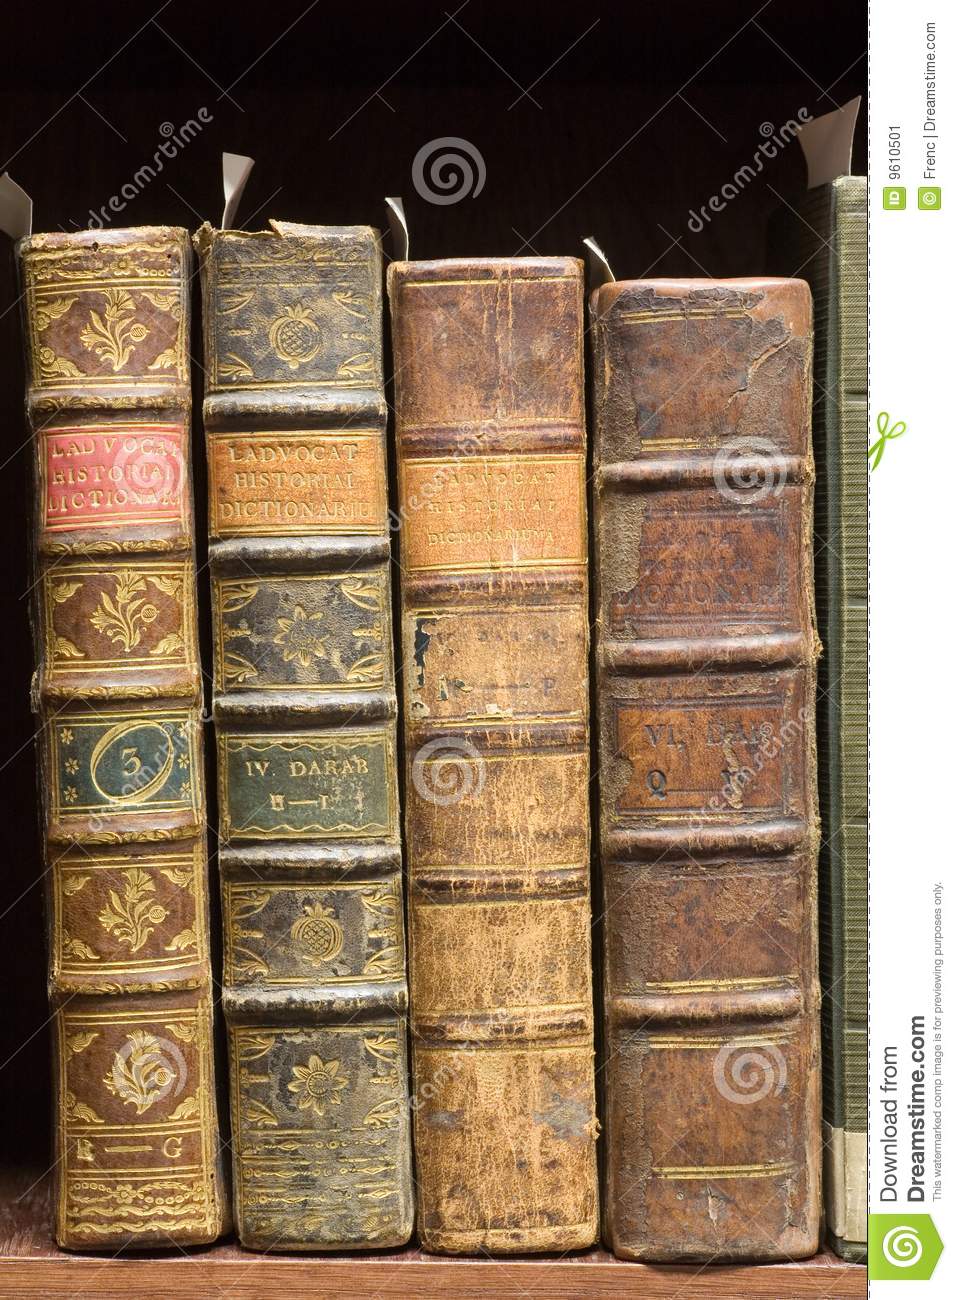 Old Books On The Shelf Stock Image   Image  9610501